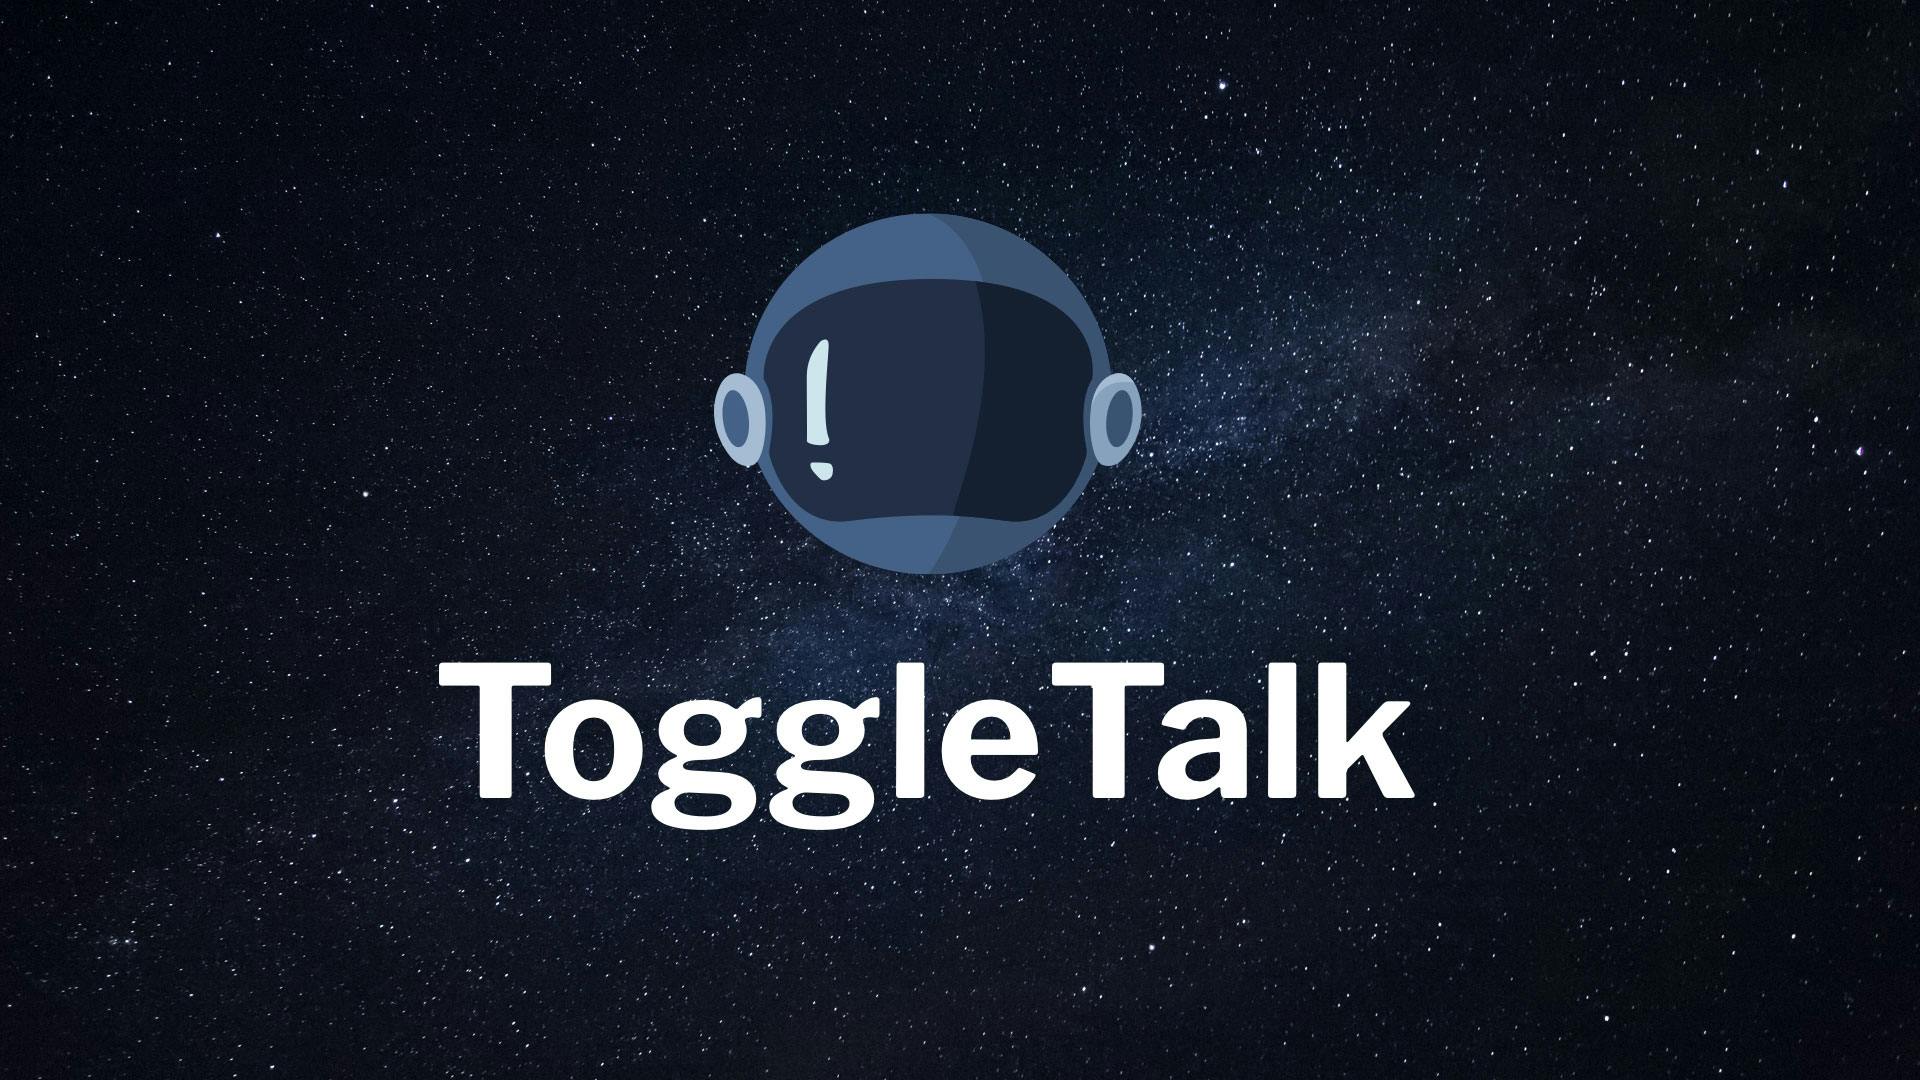 Introducing #ToggleTalk featured image